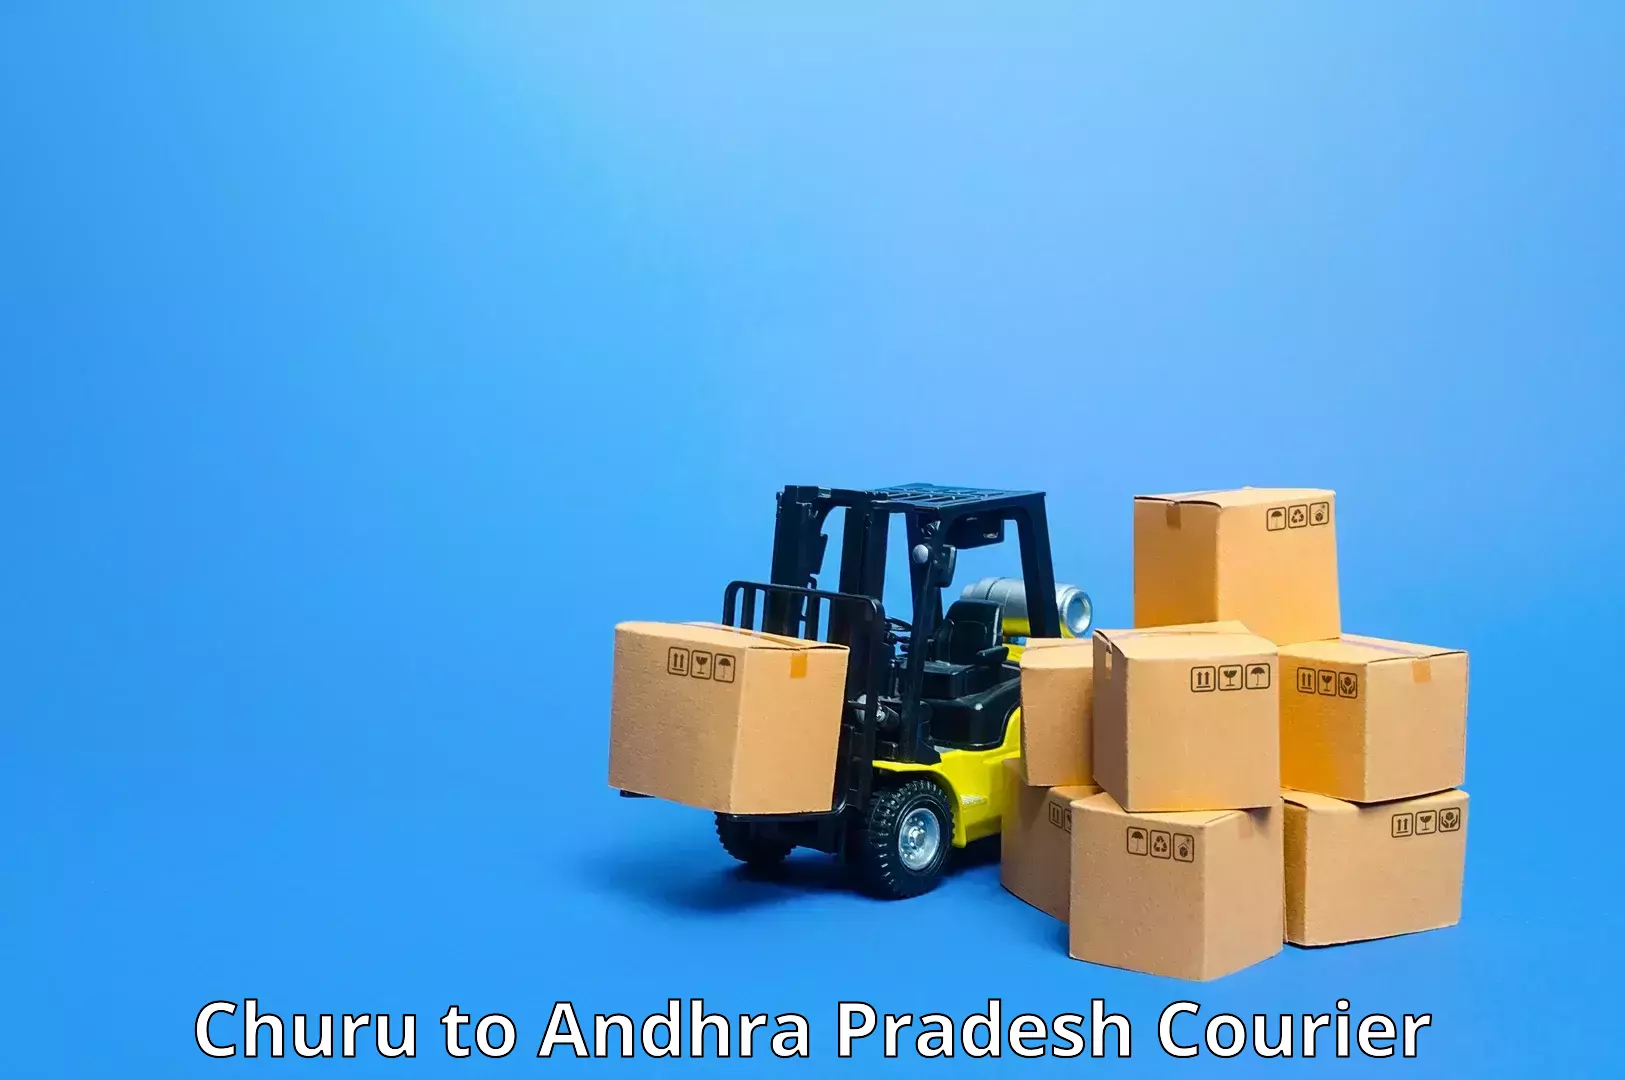 State-of-the-art courier technology Churu to Puttur Tirupati